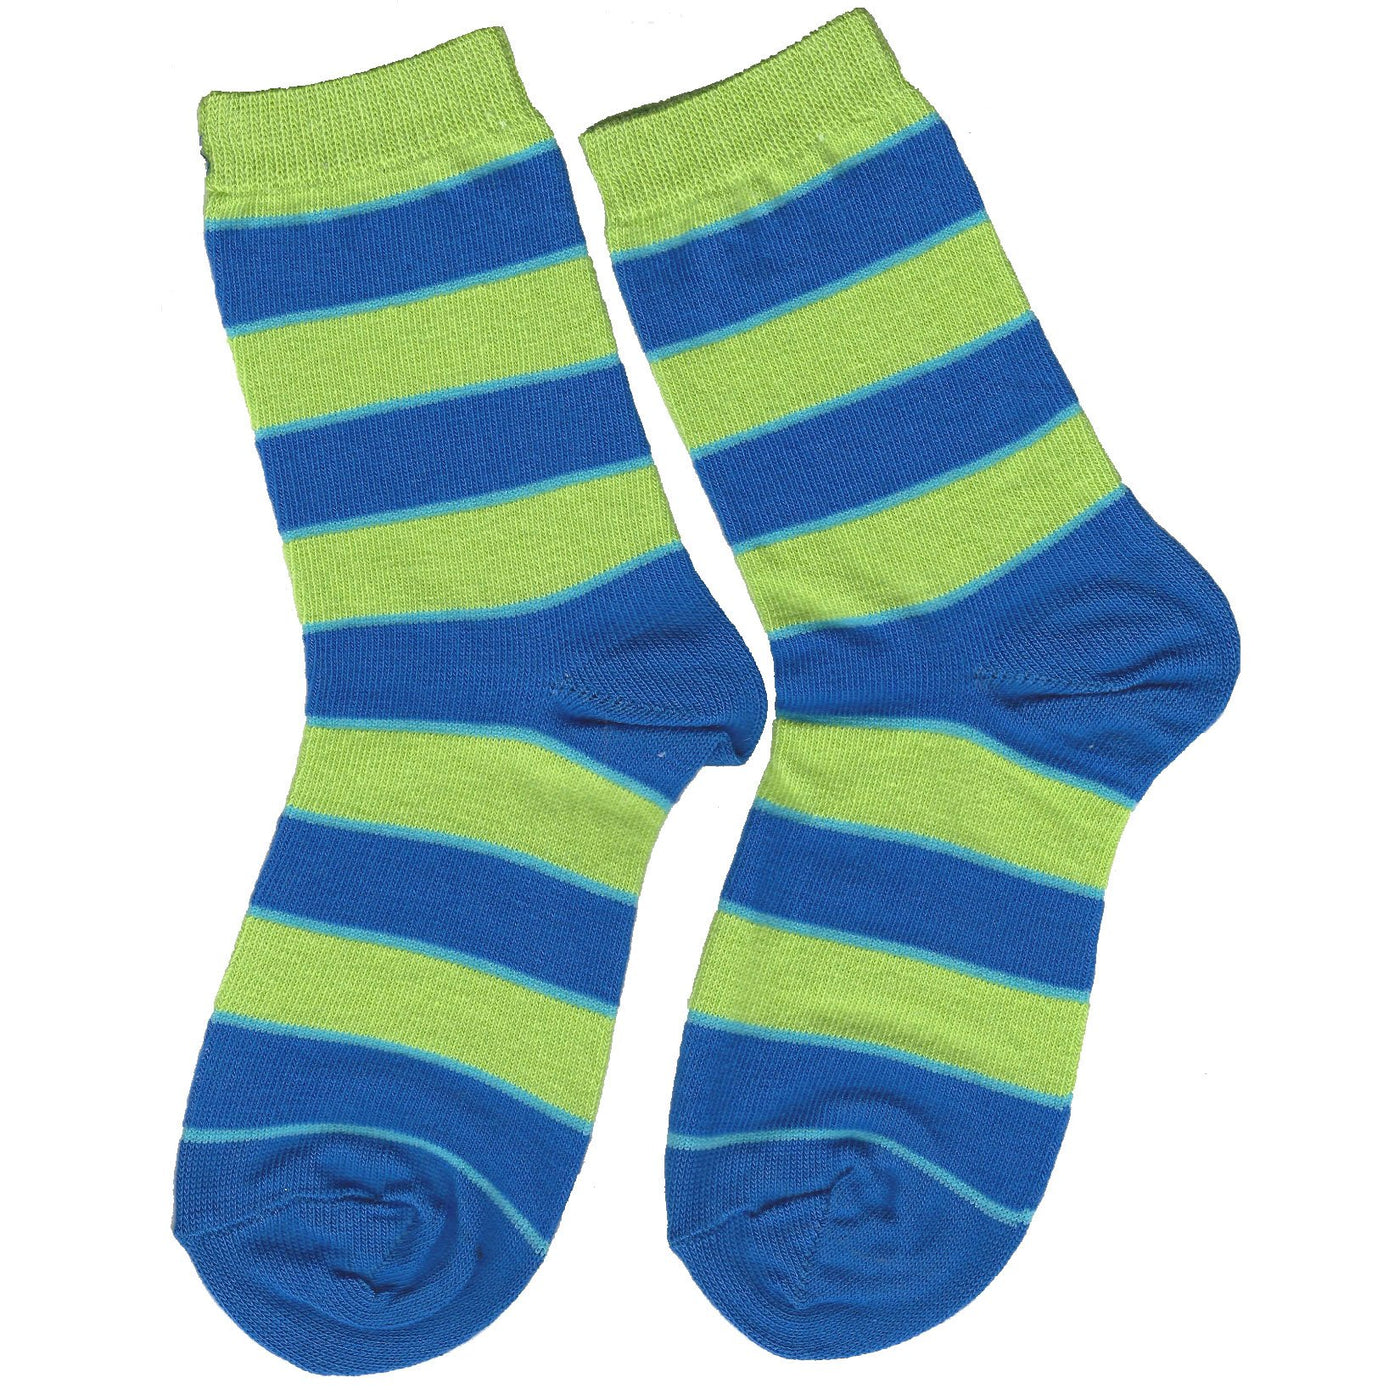 Boys Lime Striped Crew Socks by Jefferies Socks - The Boy's Store